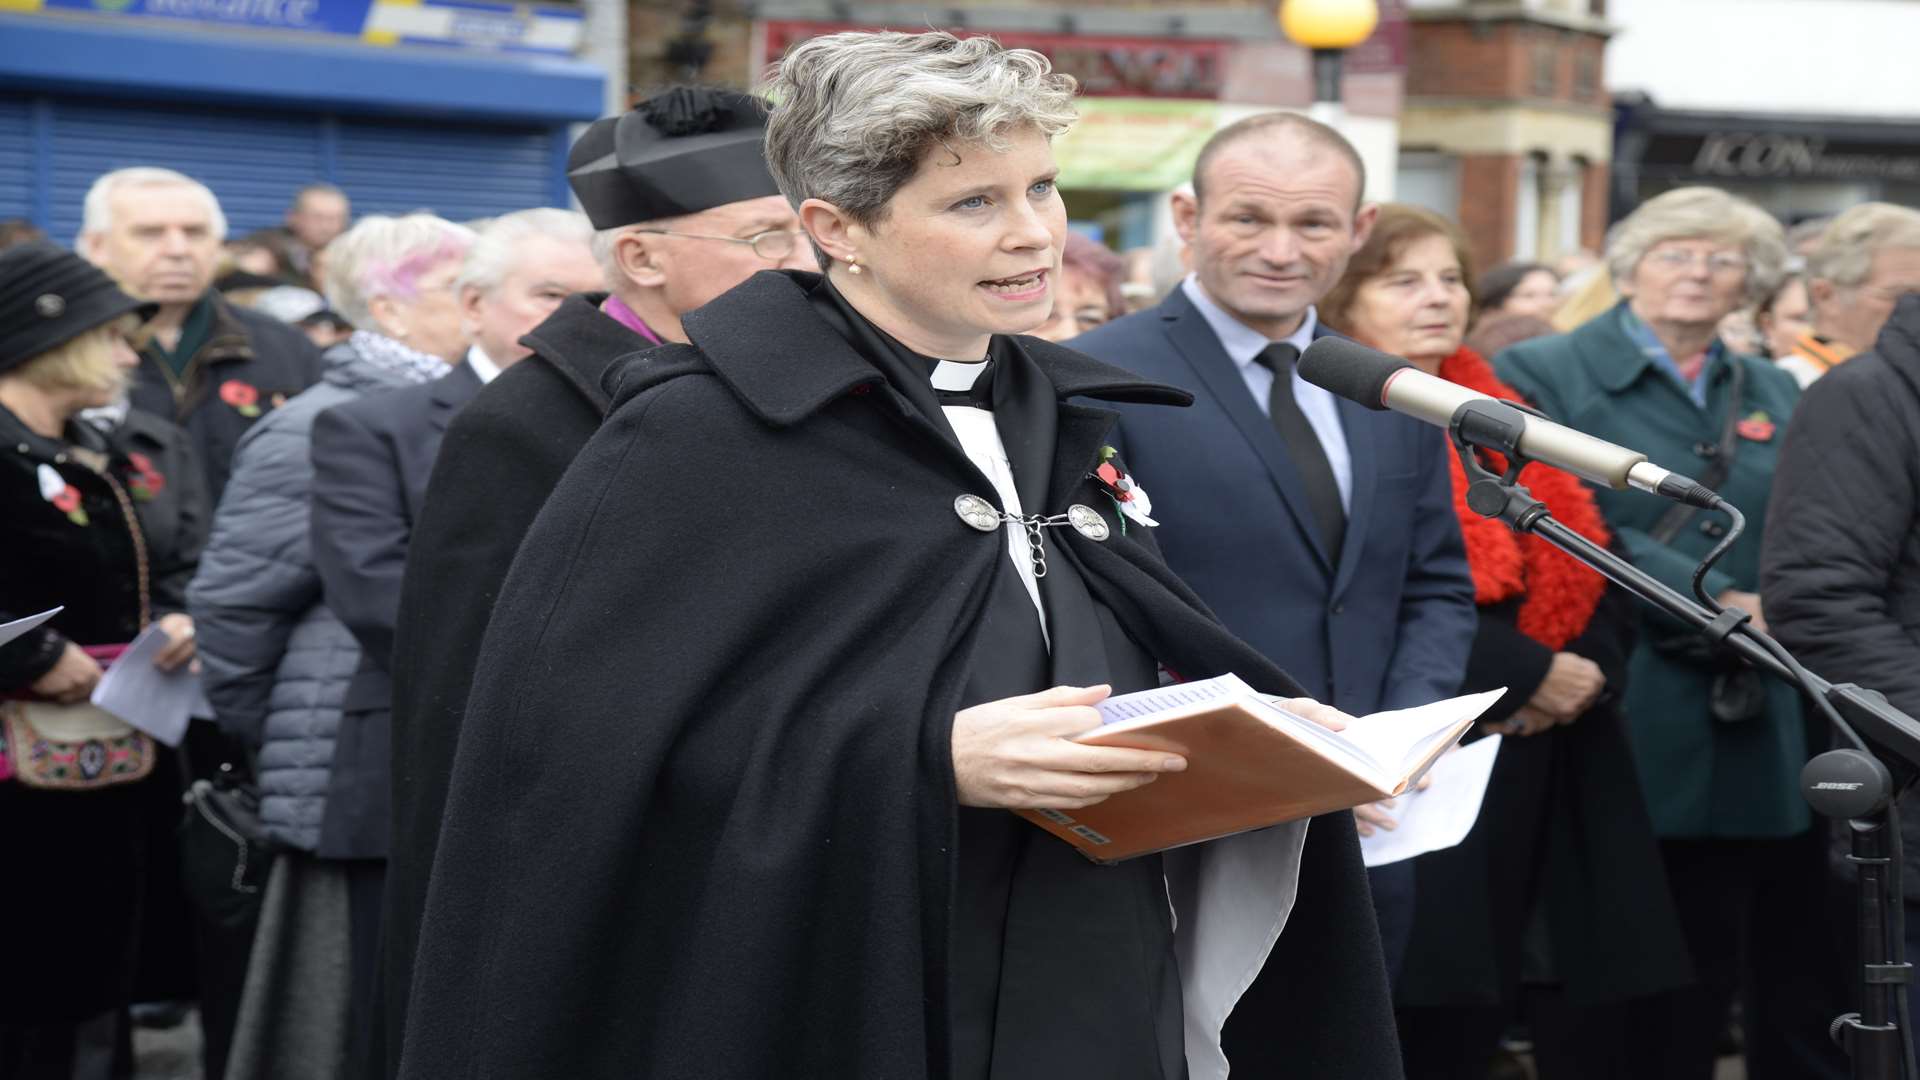 The Rev Rachel Webbley led the Remembrance Day service